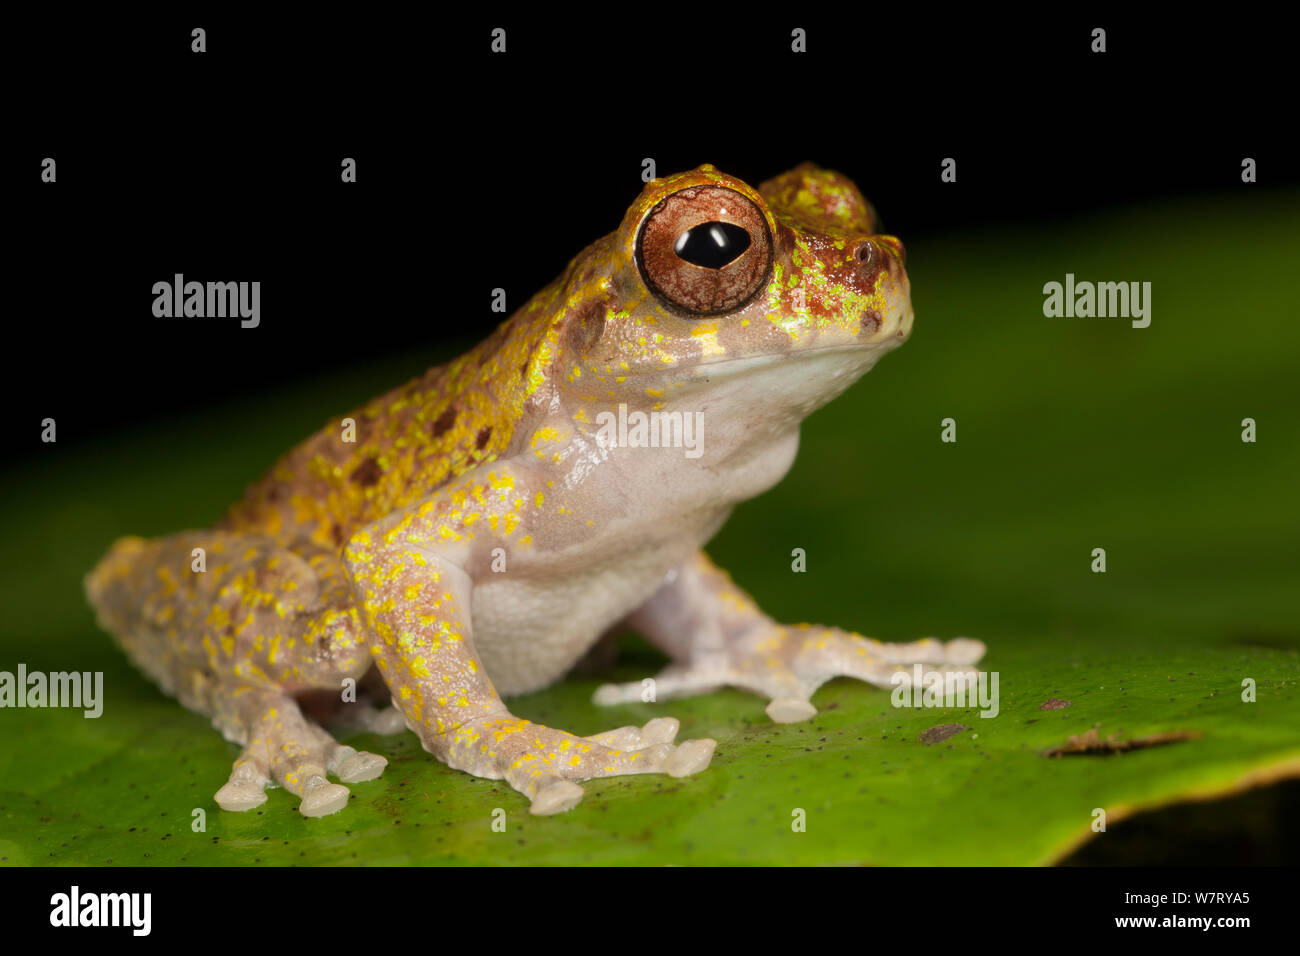 Lancaster's Tree Frog (Isthmohyla lancasteri) auf Blatt, Regenwald, Costa Rica. Stockfoto